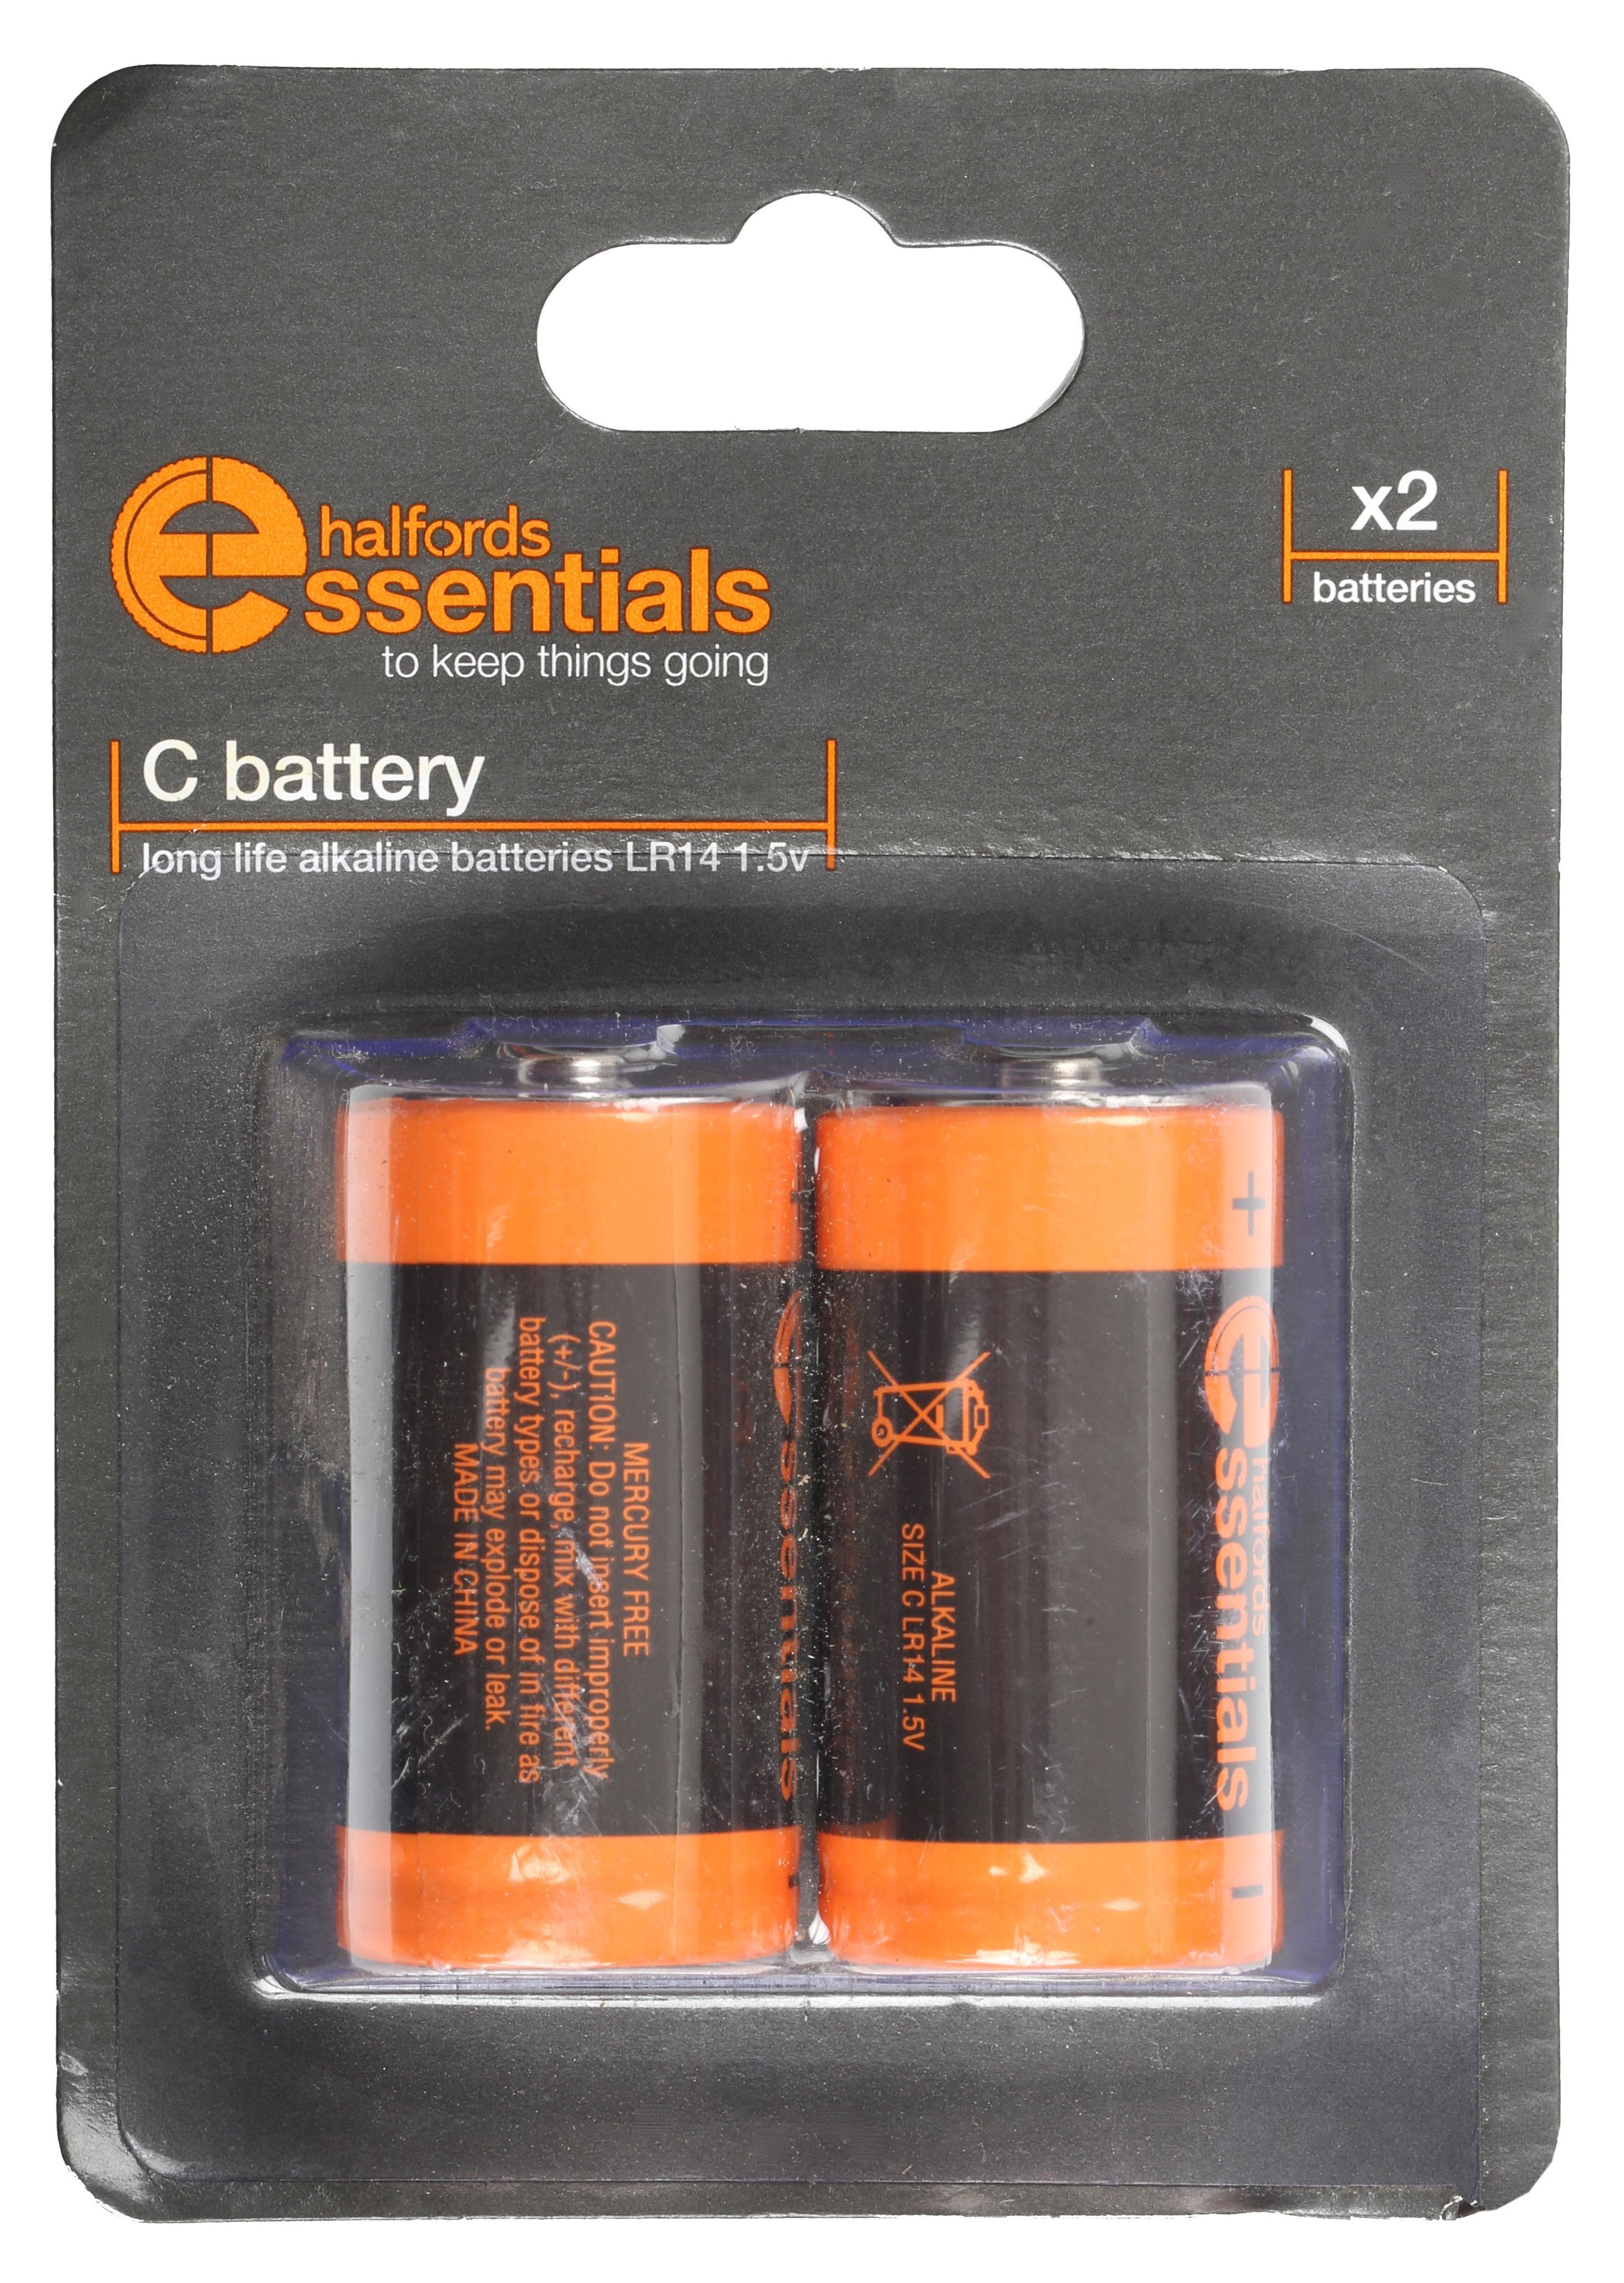 Halfords Essential Batteries C X2